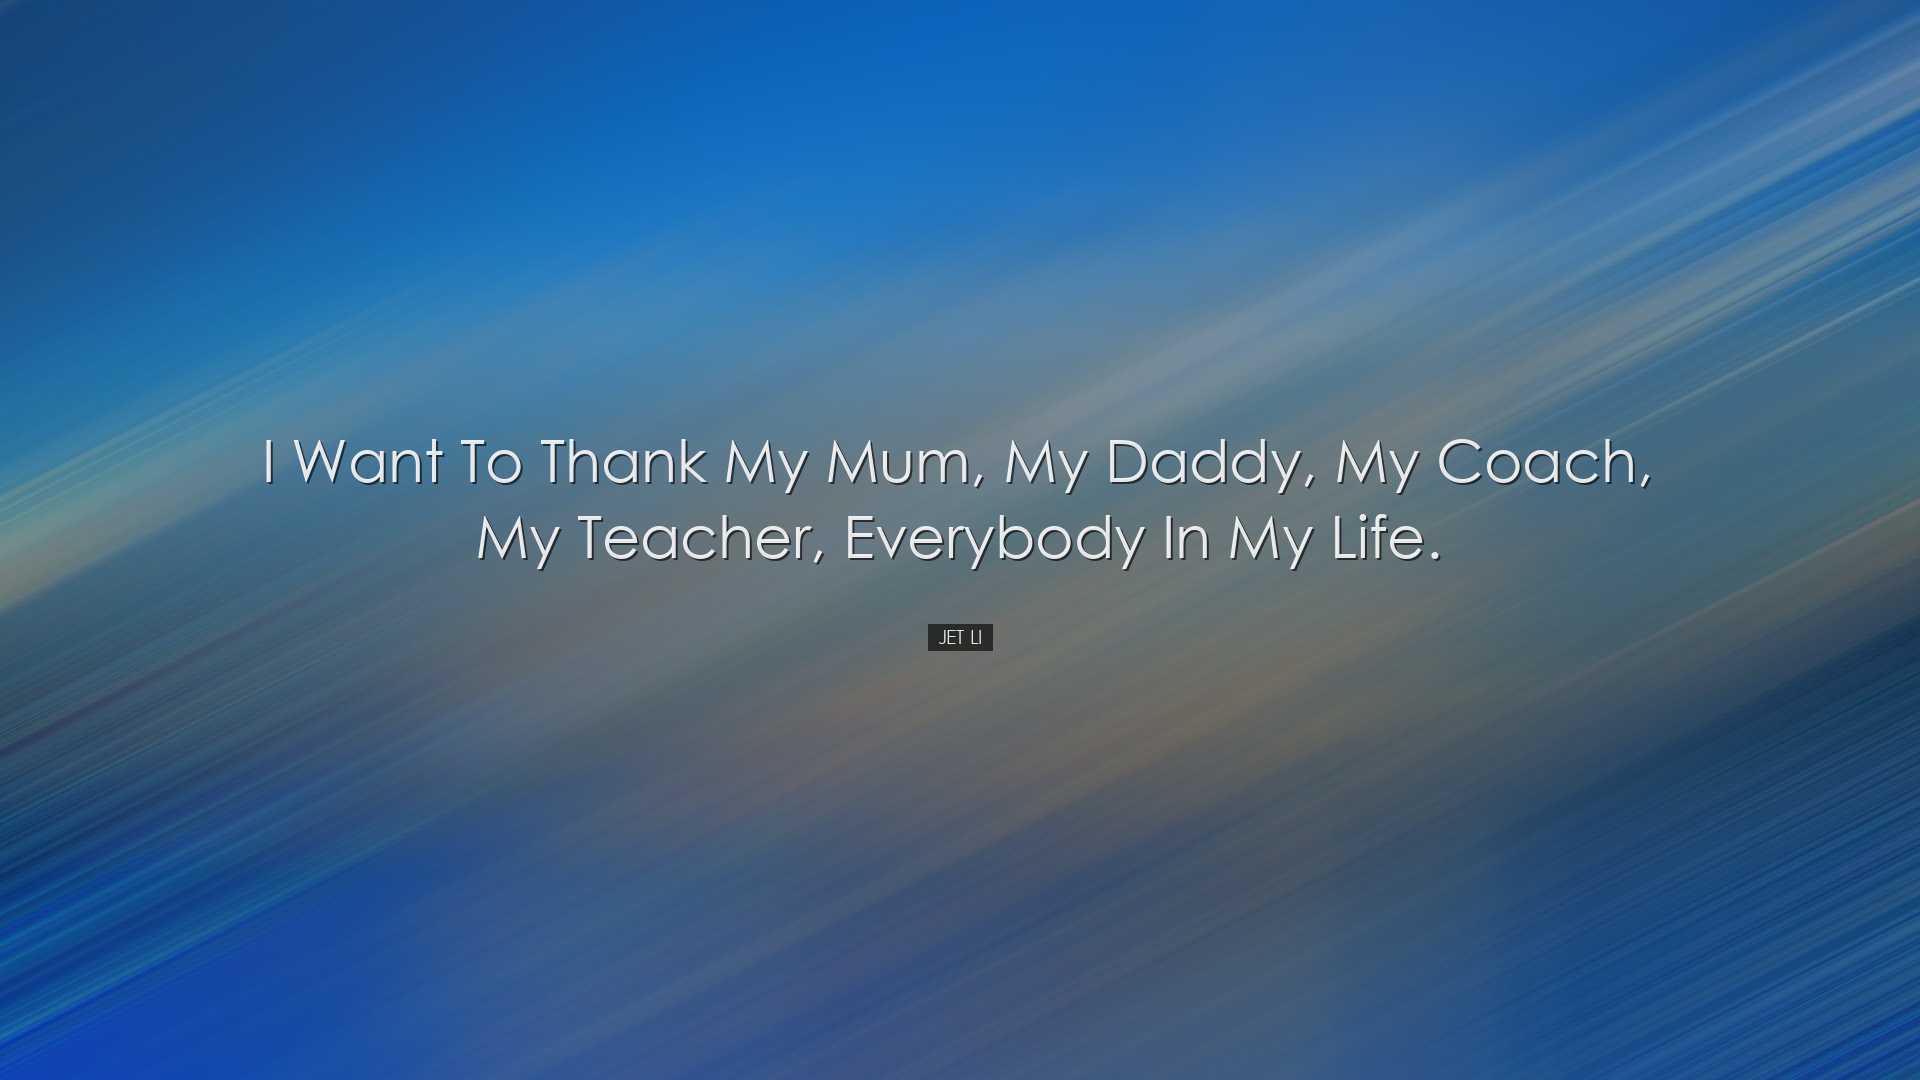 I want to thank my mum, my daddy, my coach, my teacher, everybody